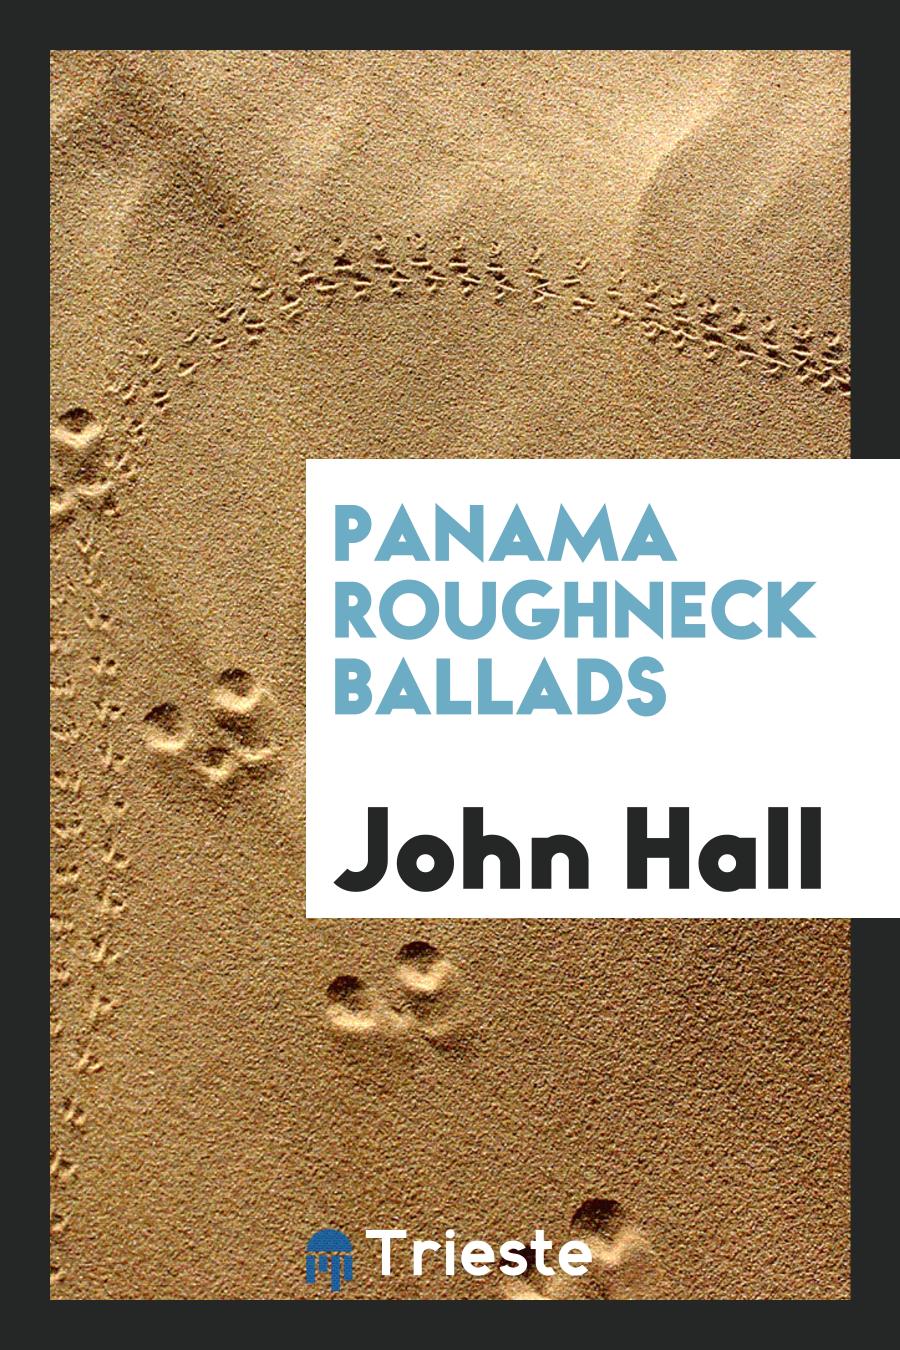 Panama Roughneck Ballads